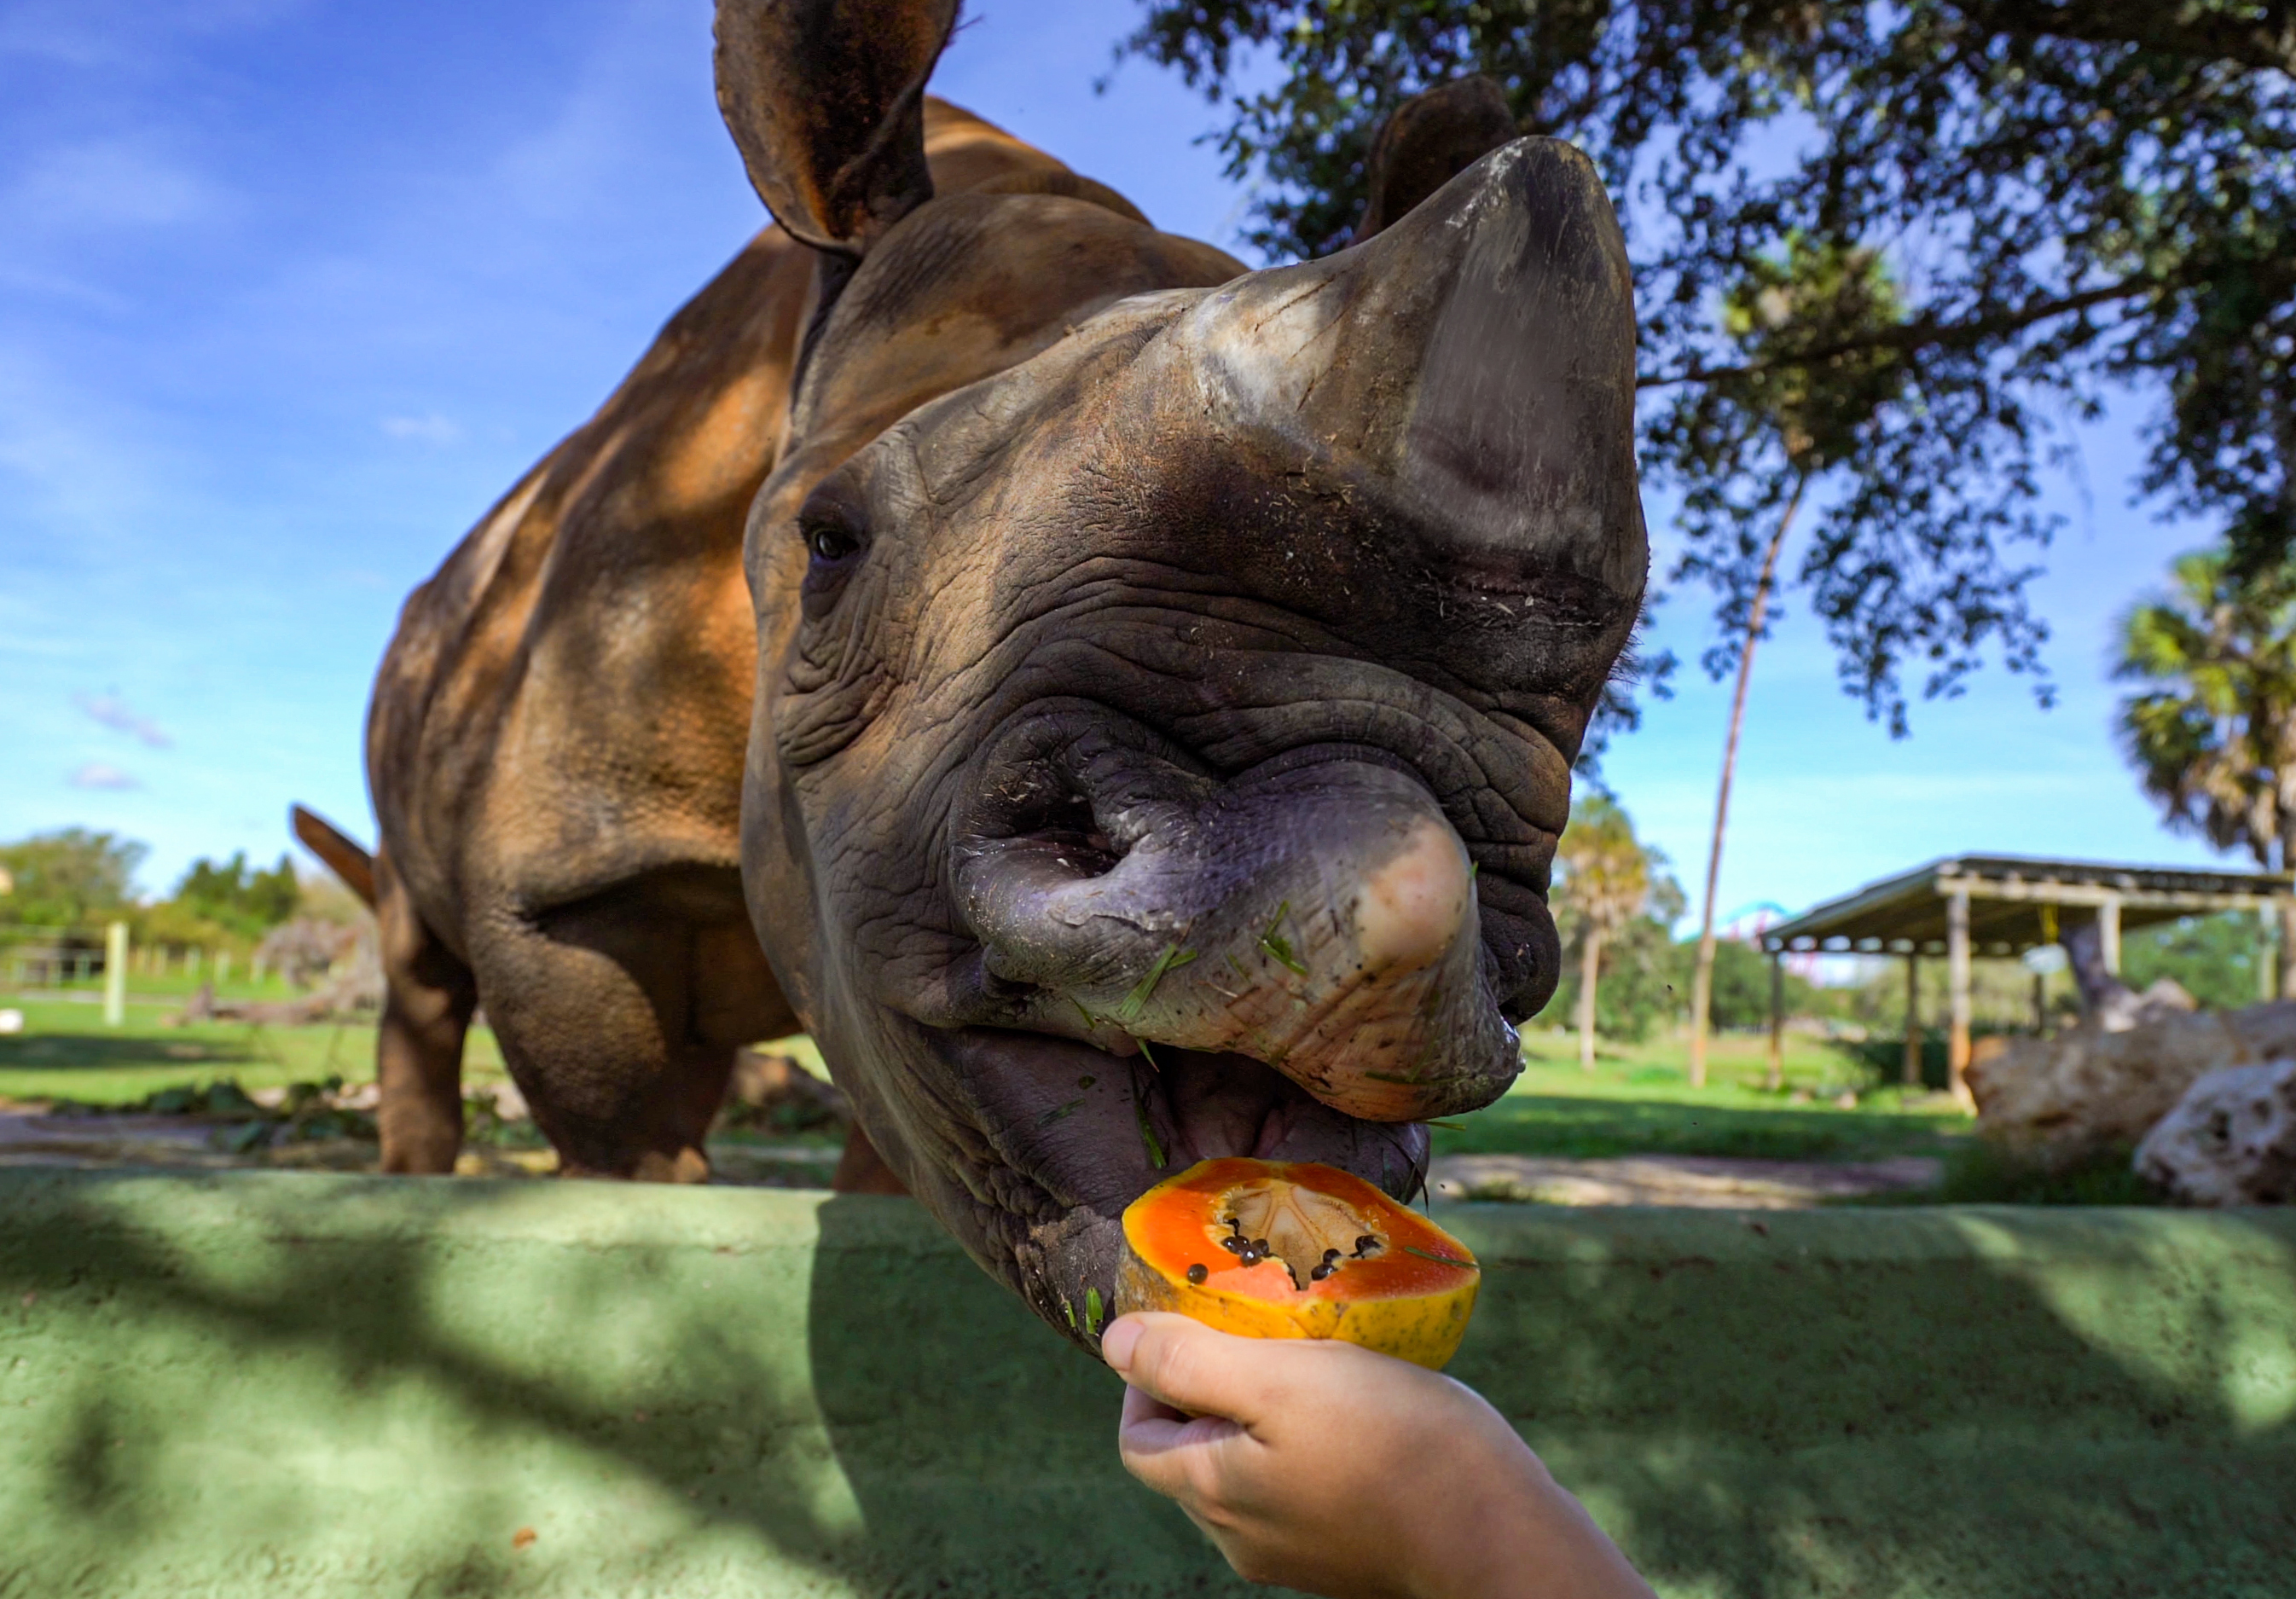 She looks after Jody, Busch Gardens' endangered black rhino